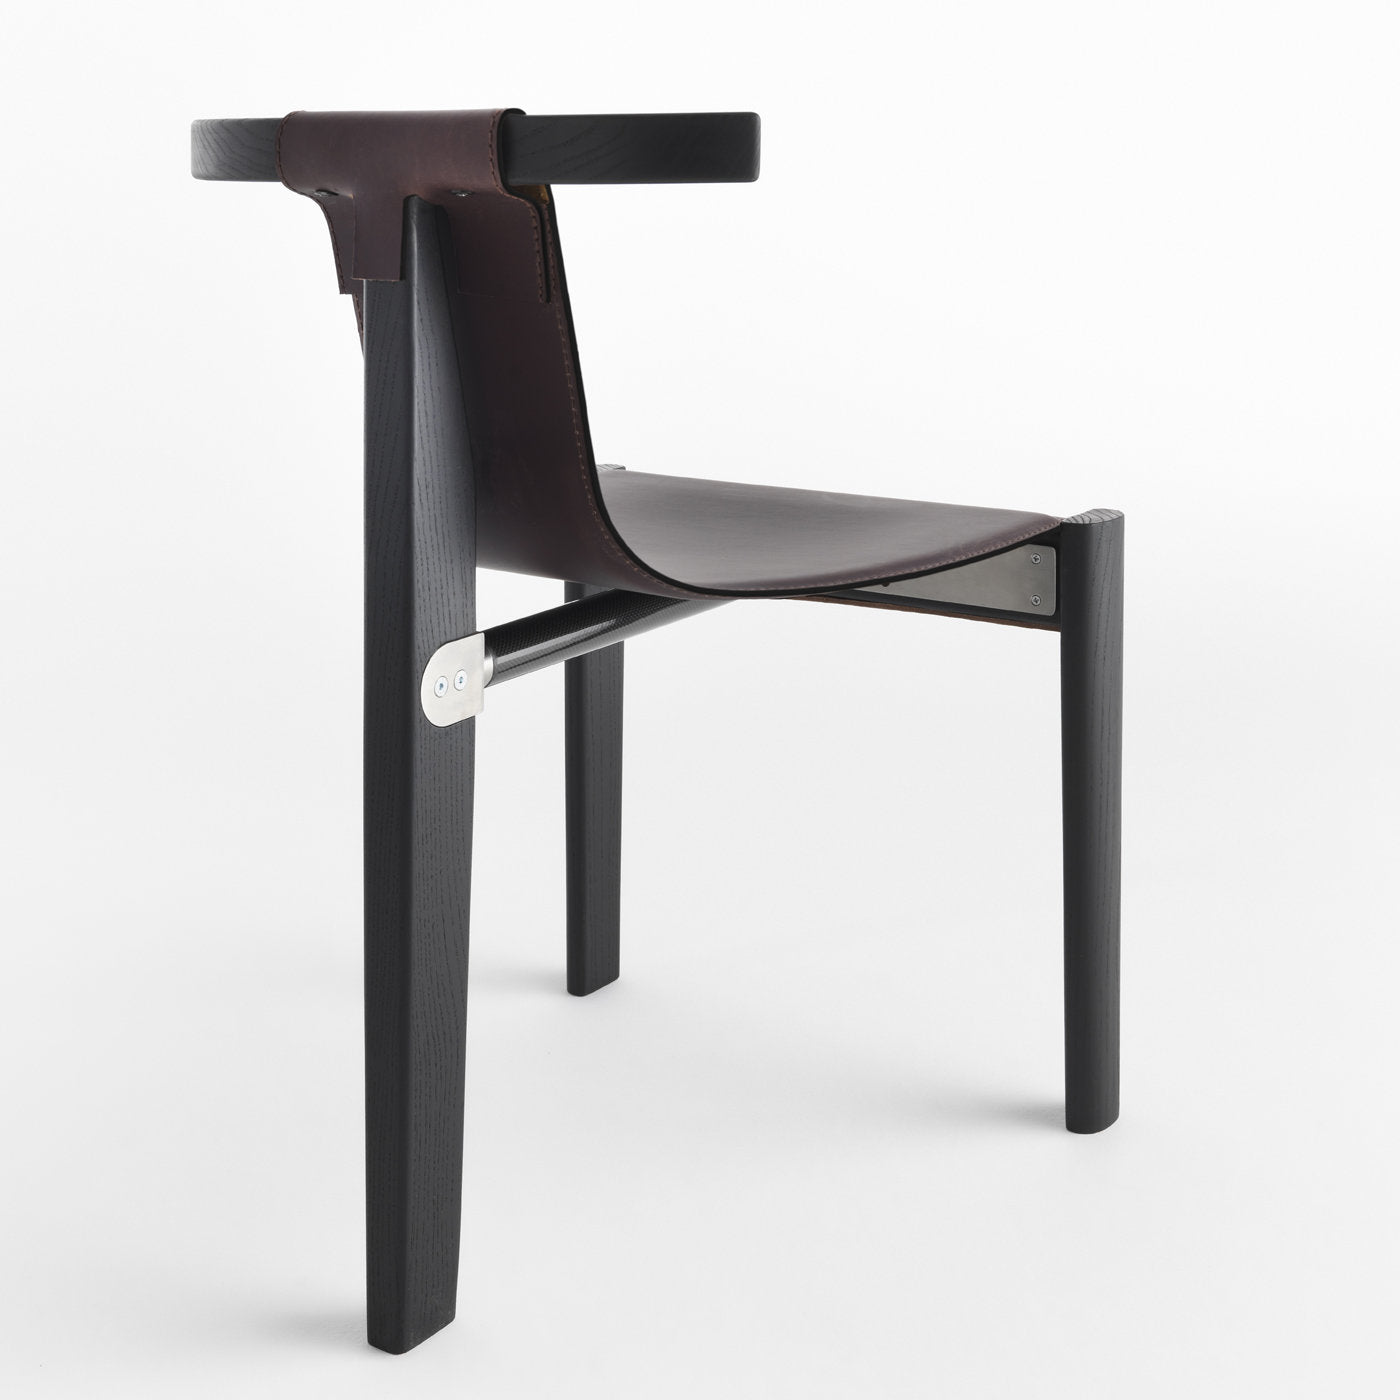 Pablita Brown Chair by Marcello Pozzi - Alternative view 2